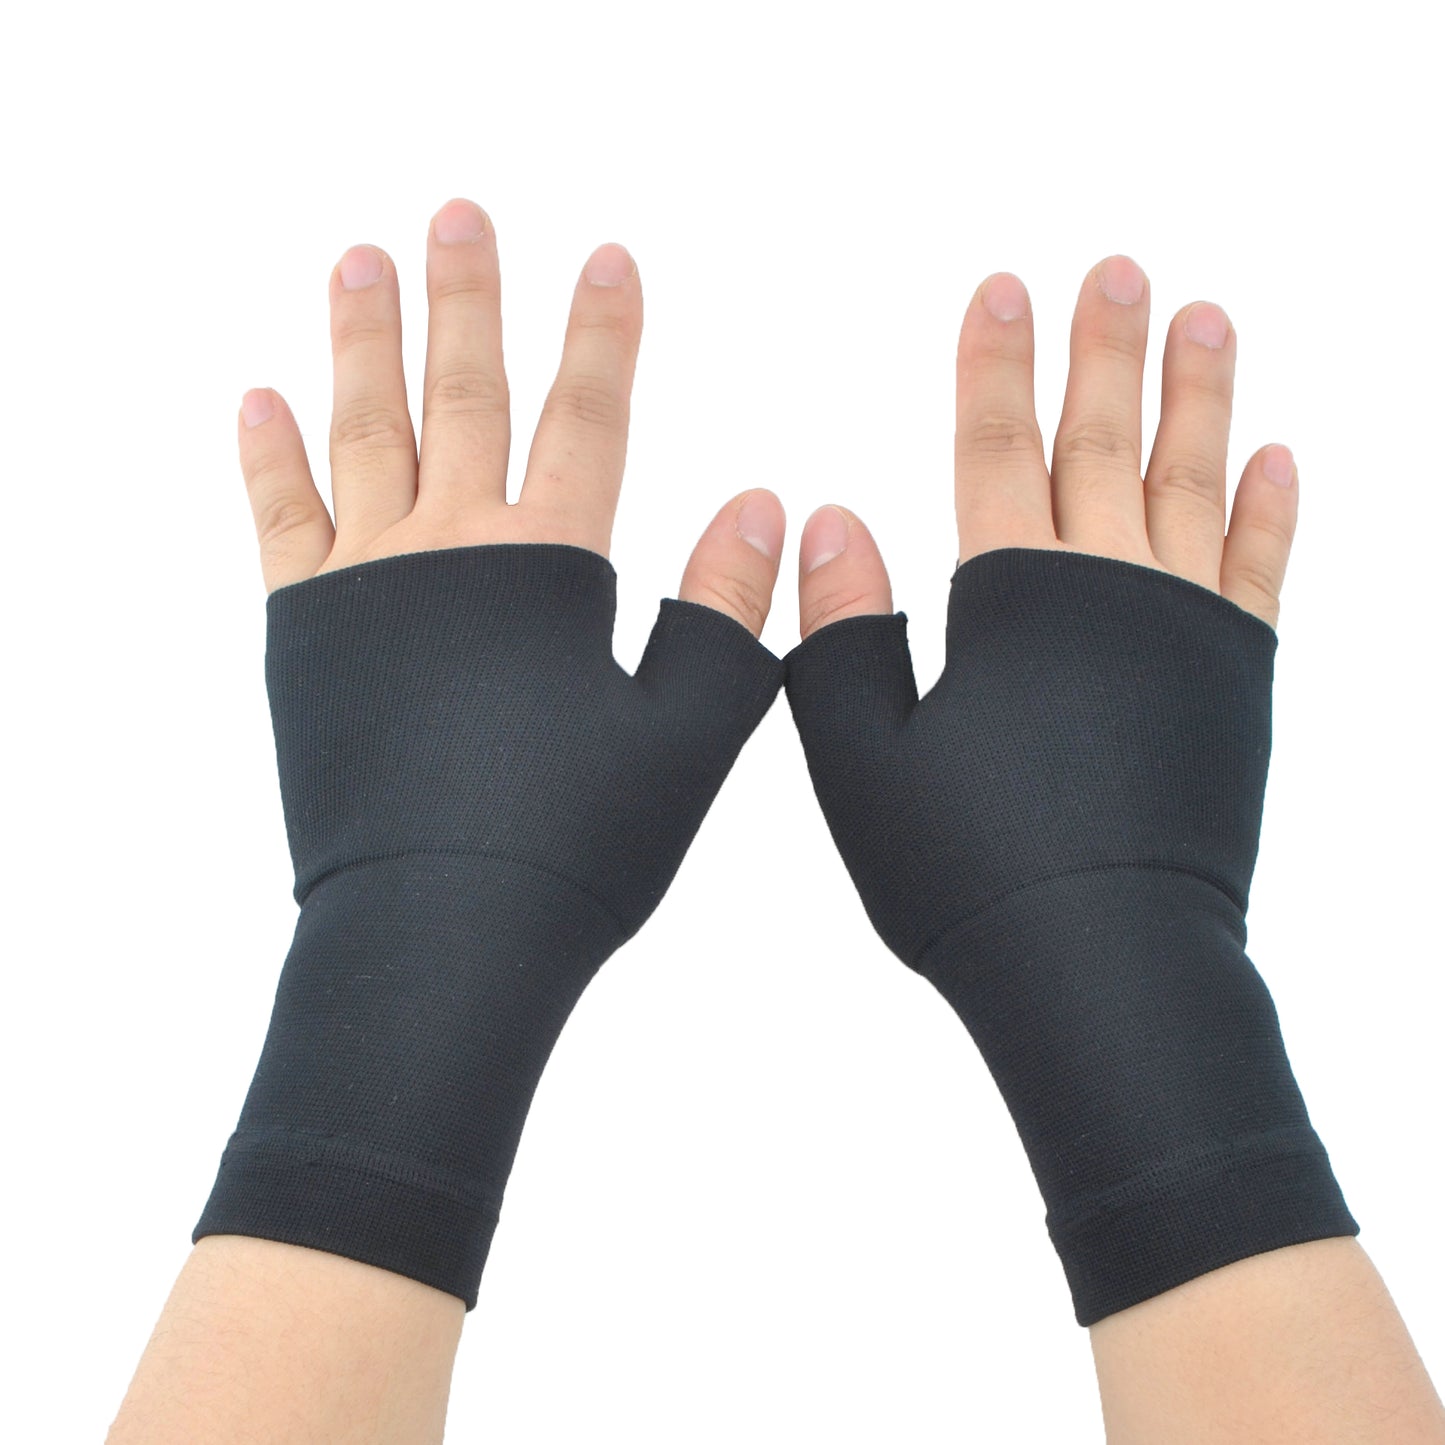 Compression Wrist Support - Wrist Sleeve for Wrist Pain, Carpal Tunnel - Wrist Brace